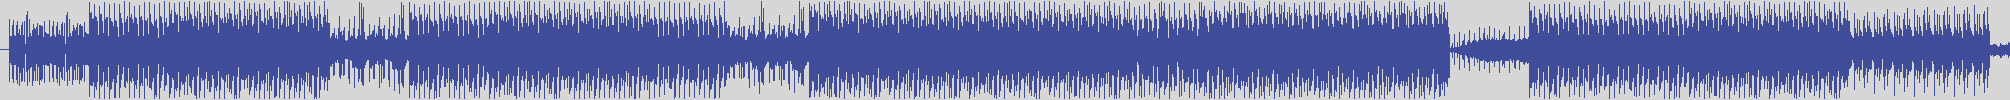 nf_boyz_records [NFY073] Orbiting Horsefly - Pincky Mortal [Original Mix] audio wave form